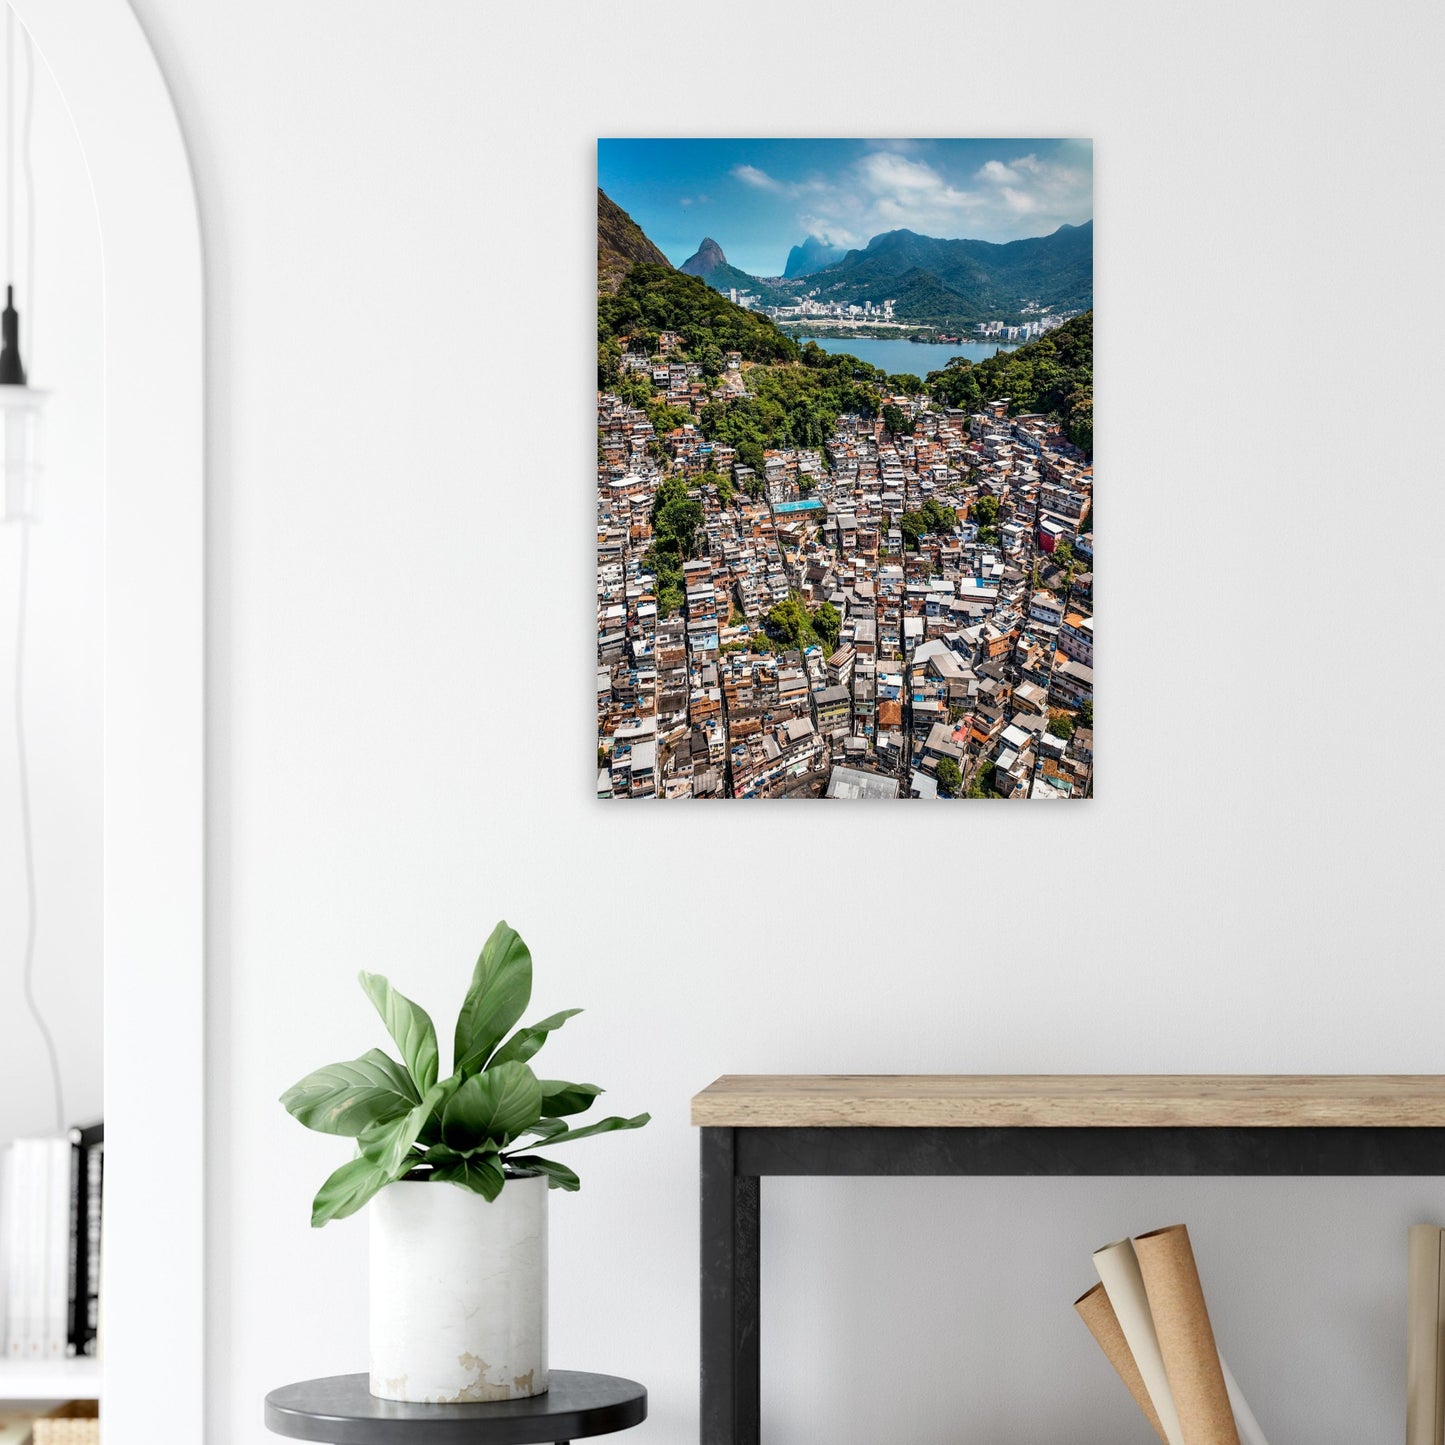 Rio de Janeiro Houses On The Hills Poster